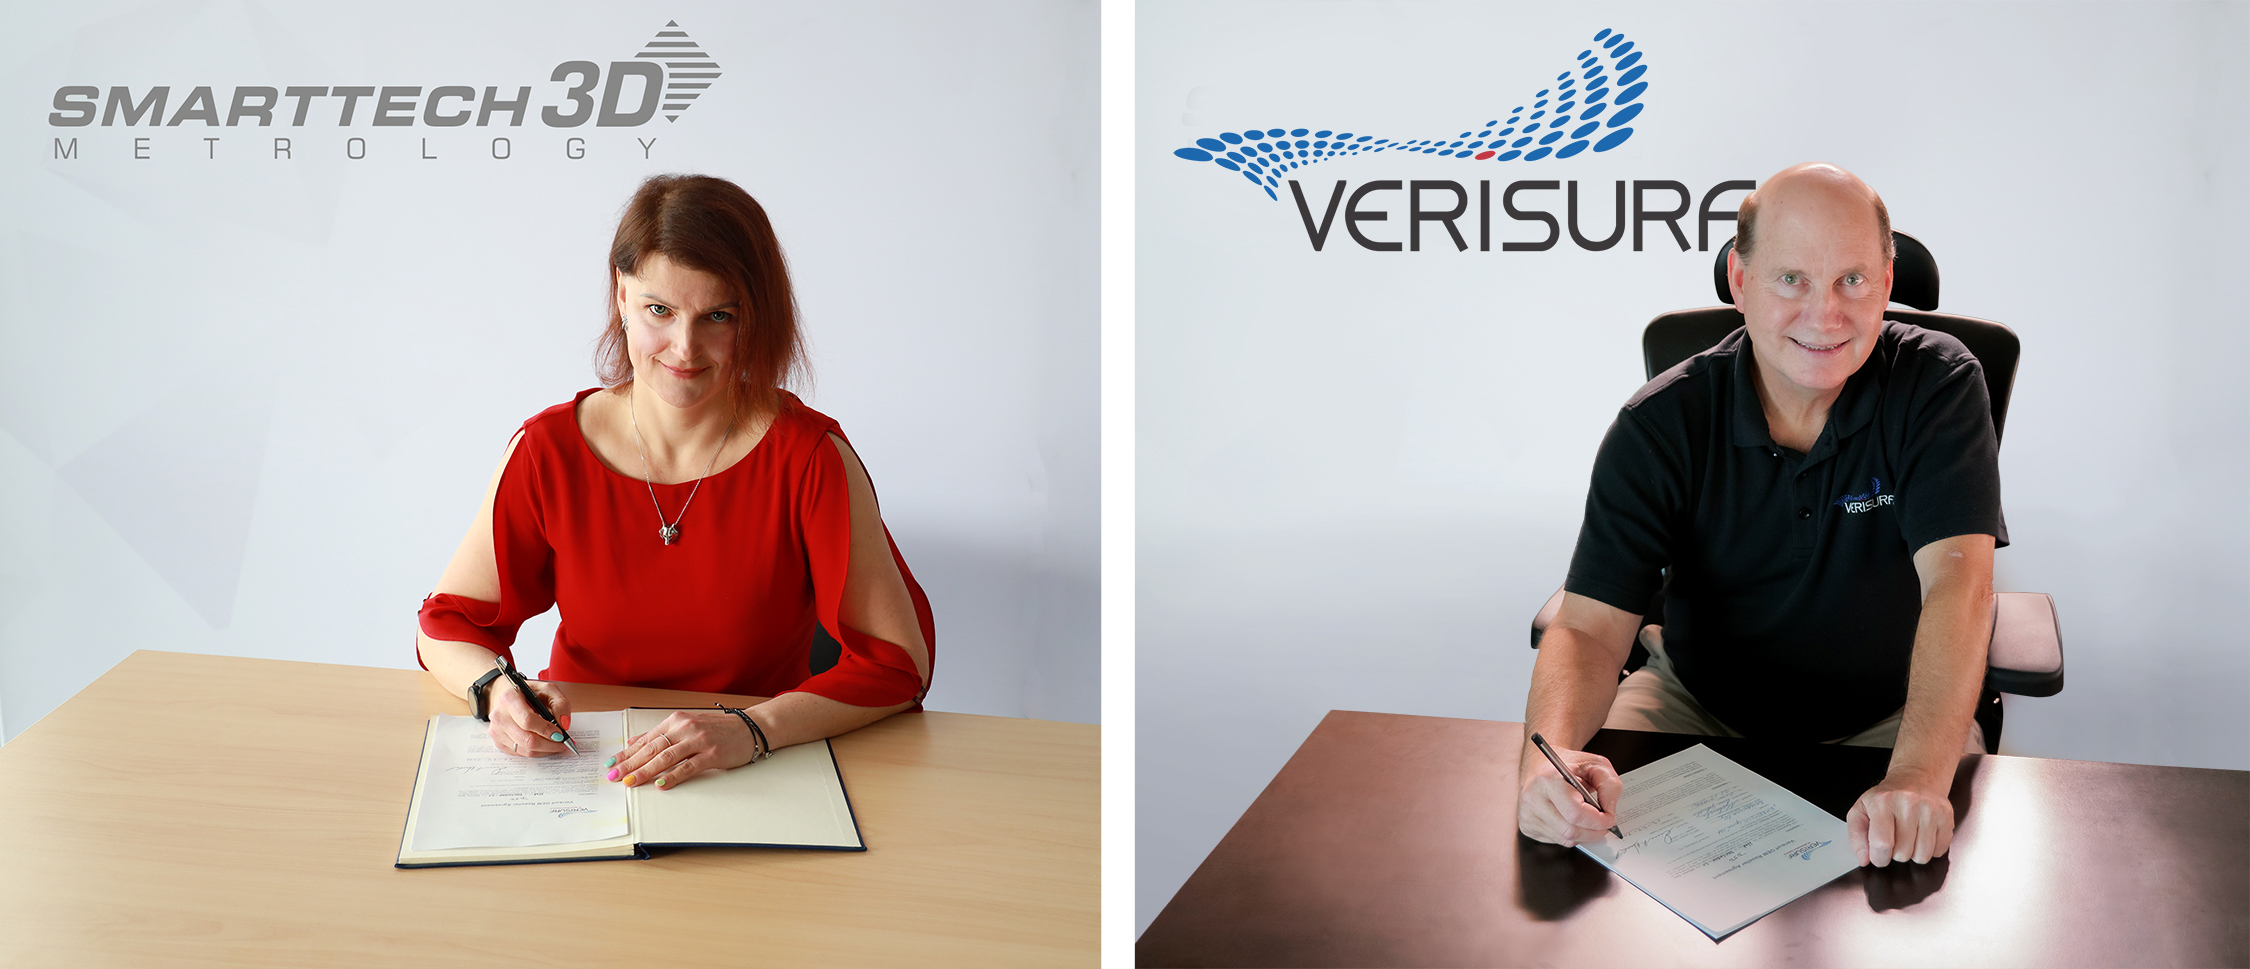 verisurf smarttech3d ceo's signing partner agreement